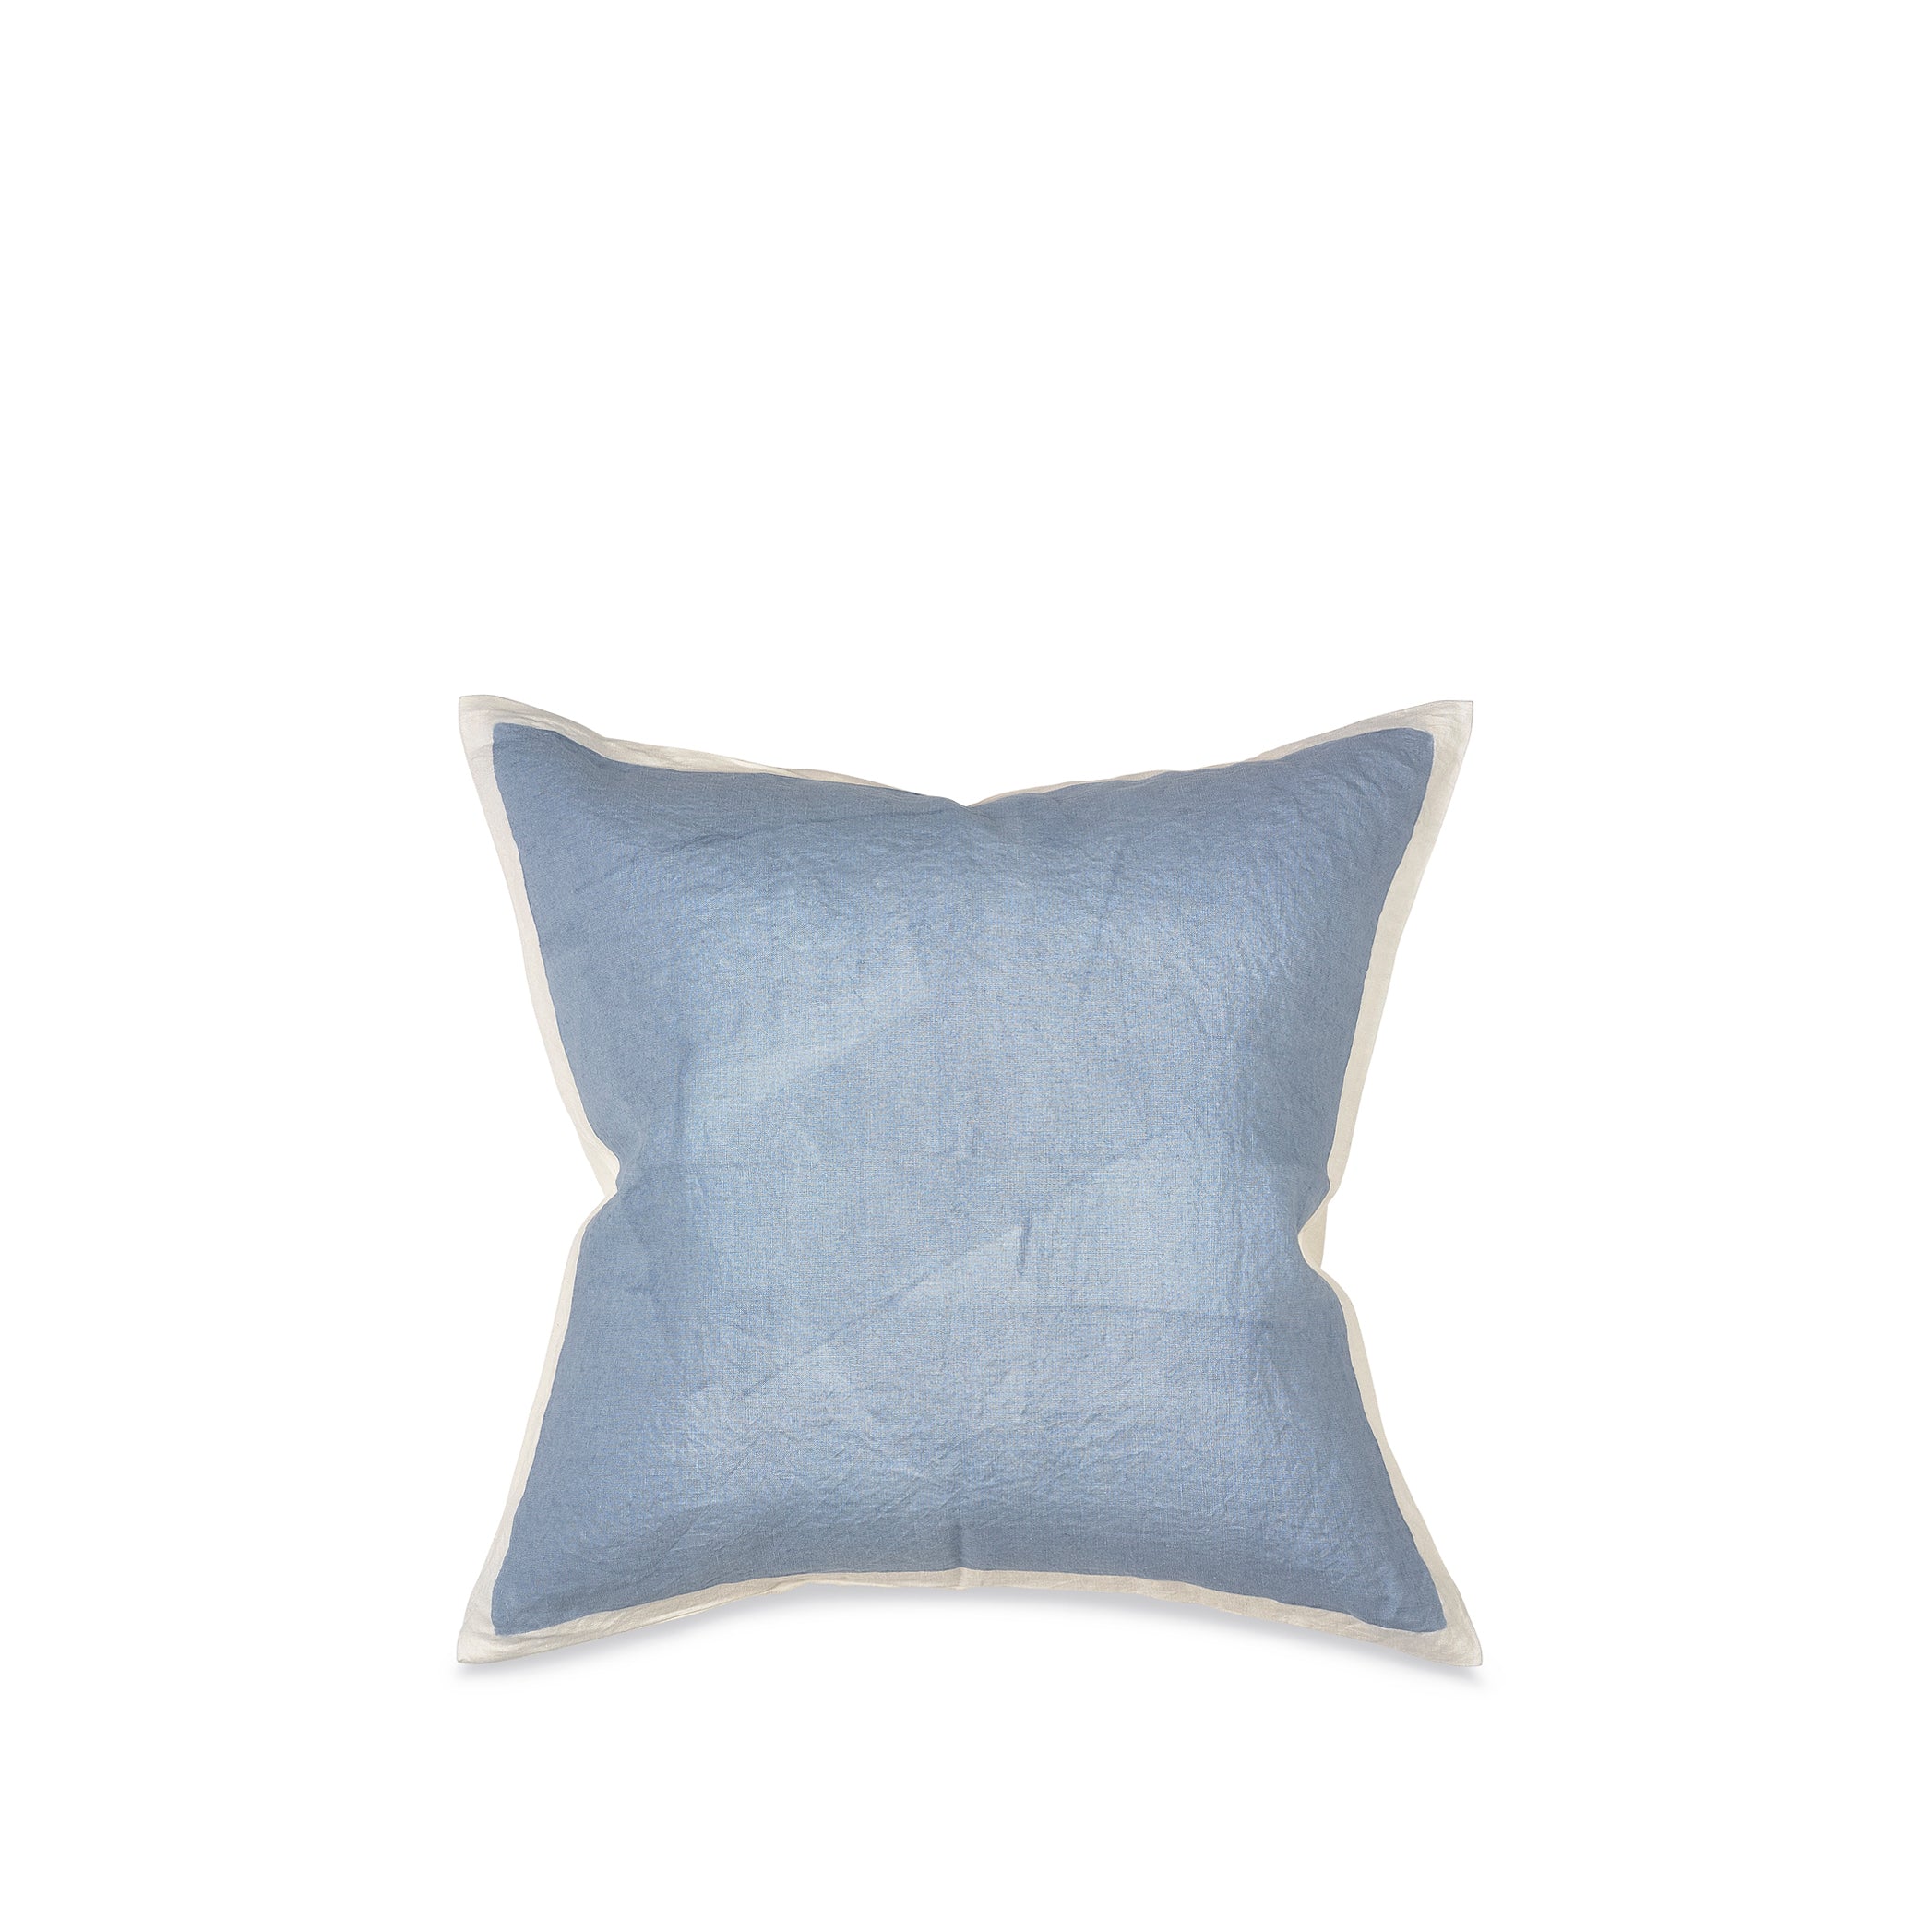 Hand Painted Linen Cushion in Pale Blue, 50cm x 50cm